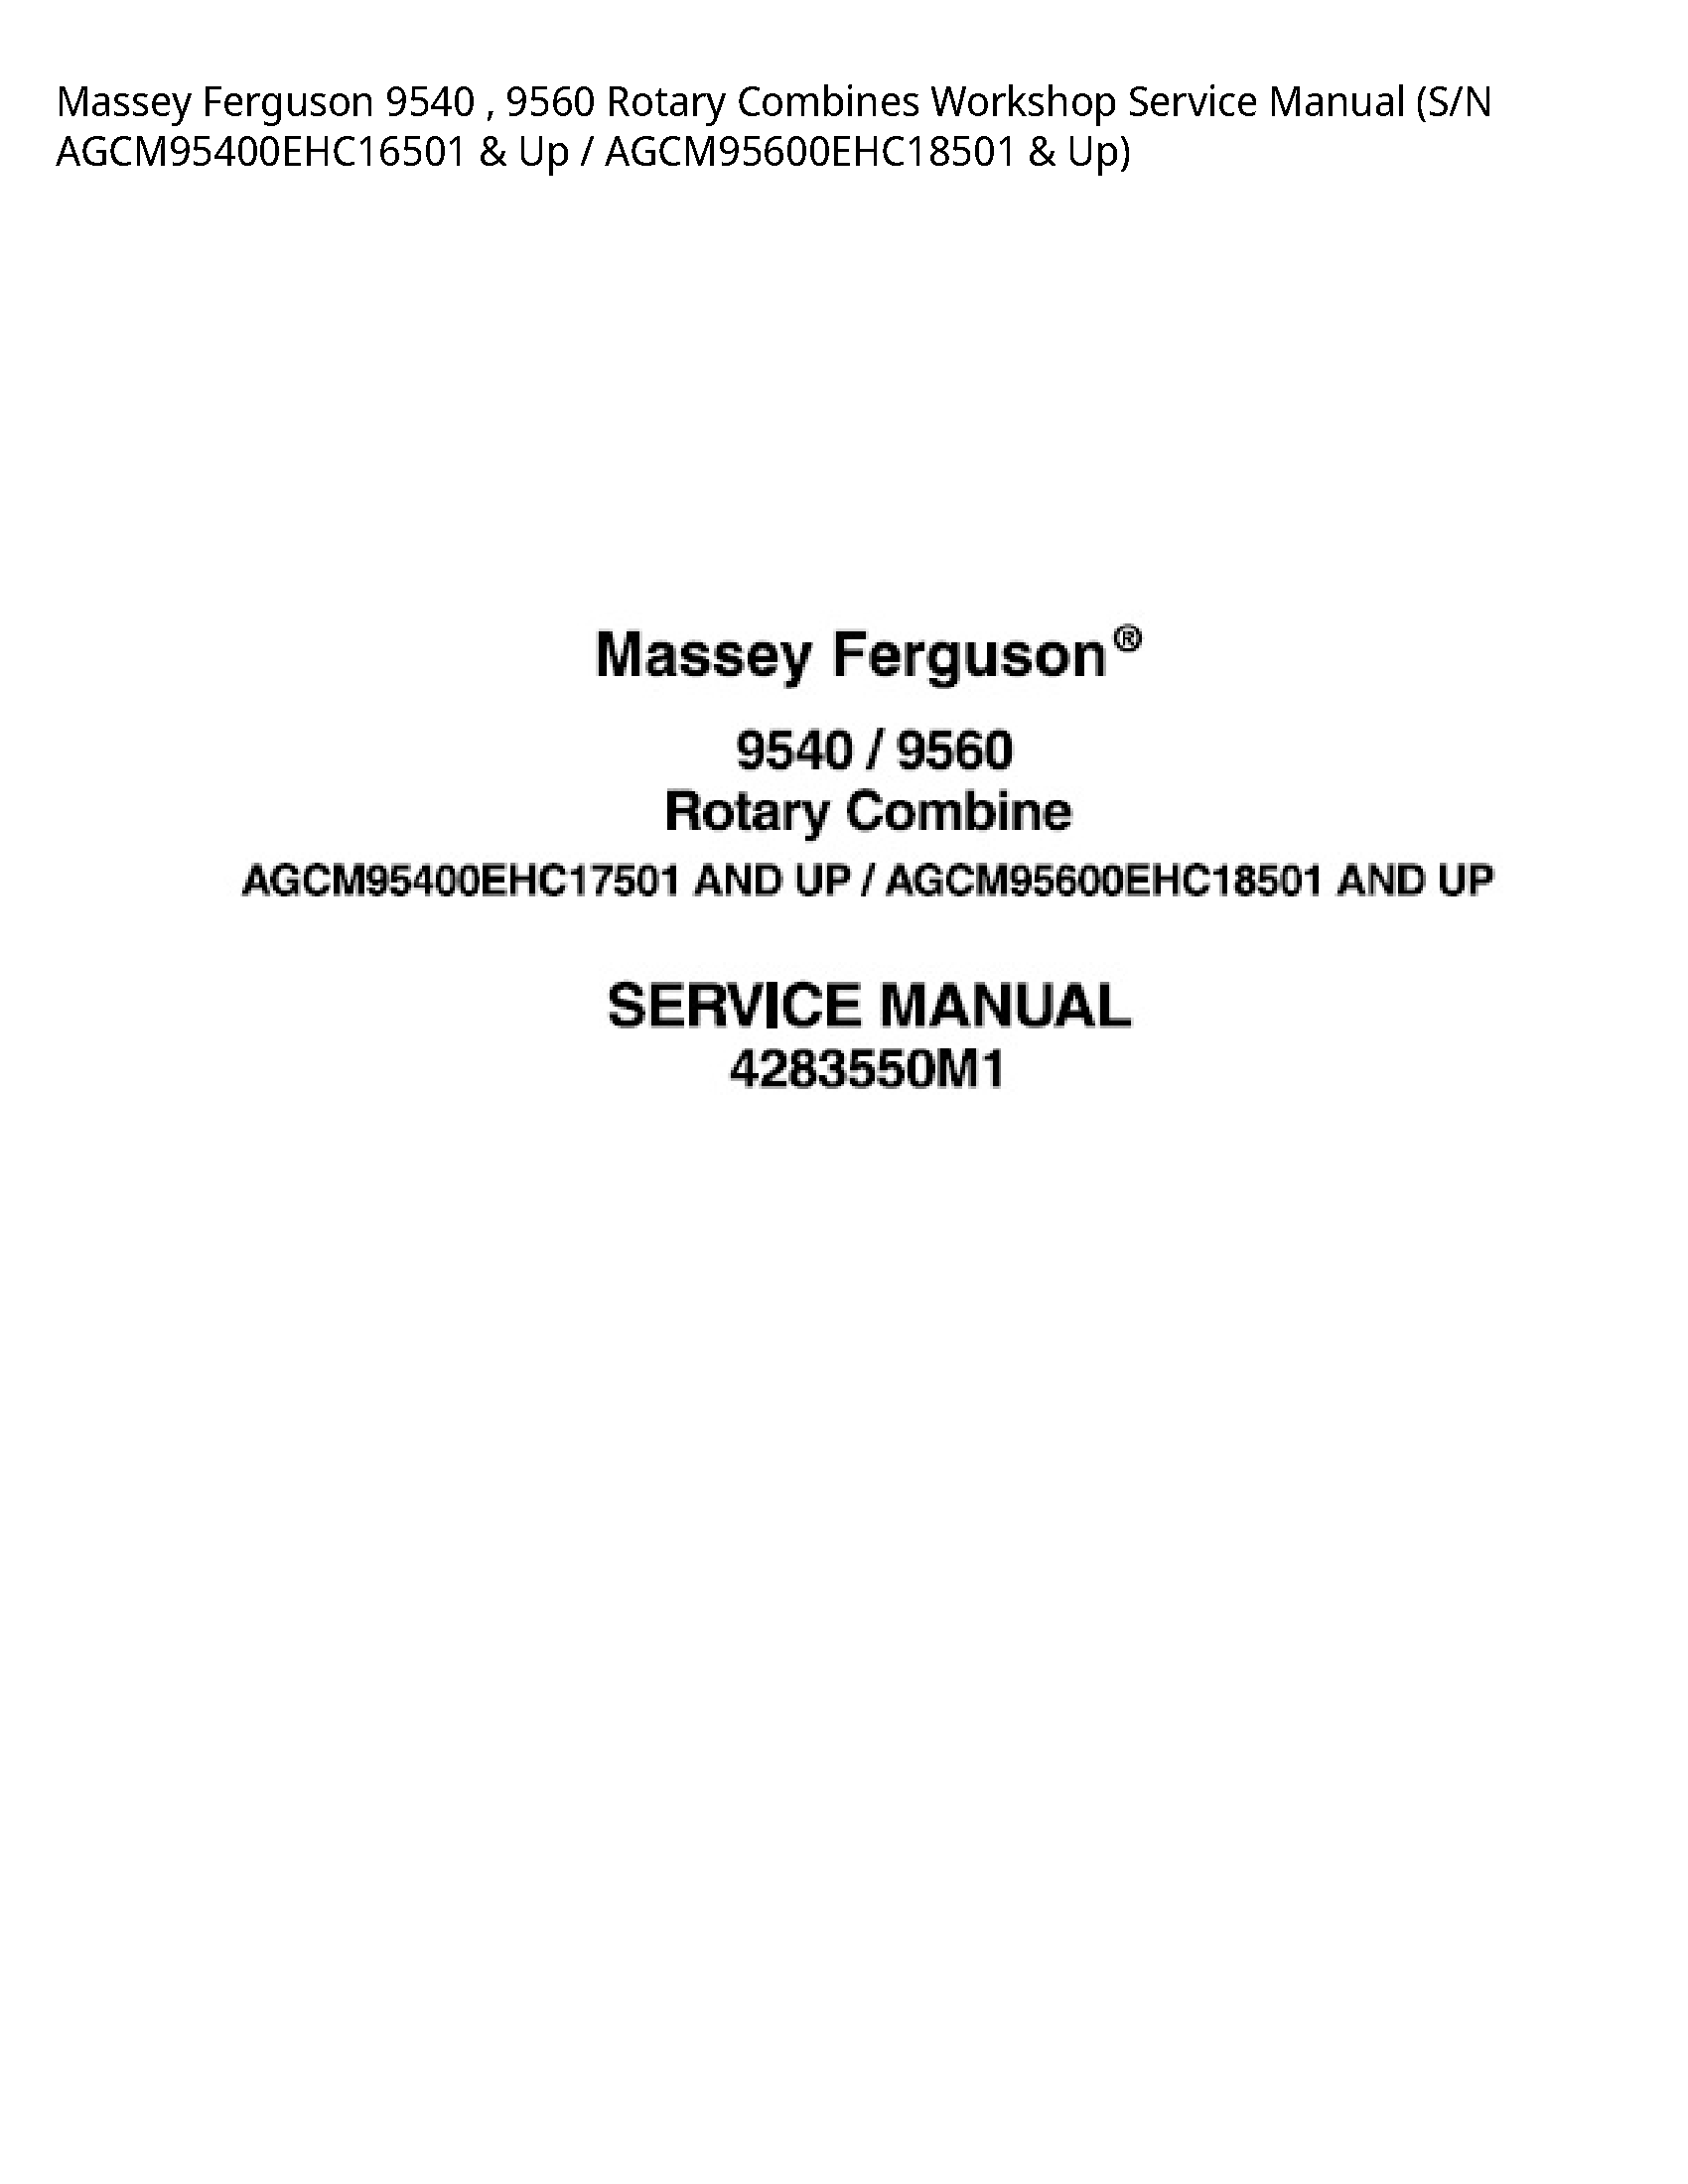 Massey Ferguson 9540 Rotary Combines Service manual